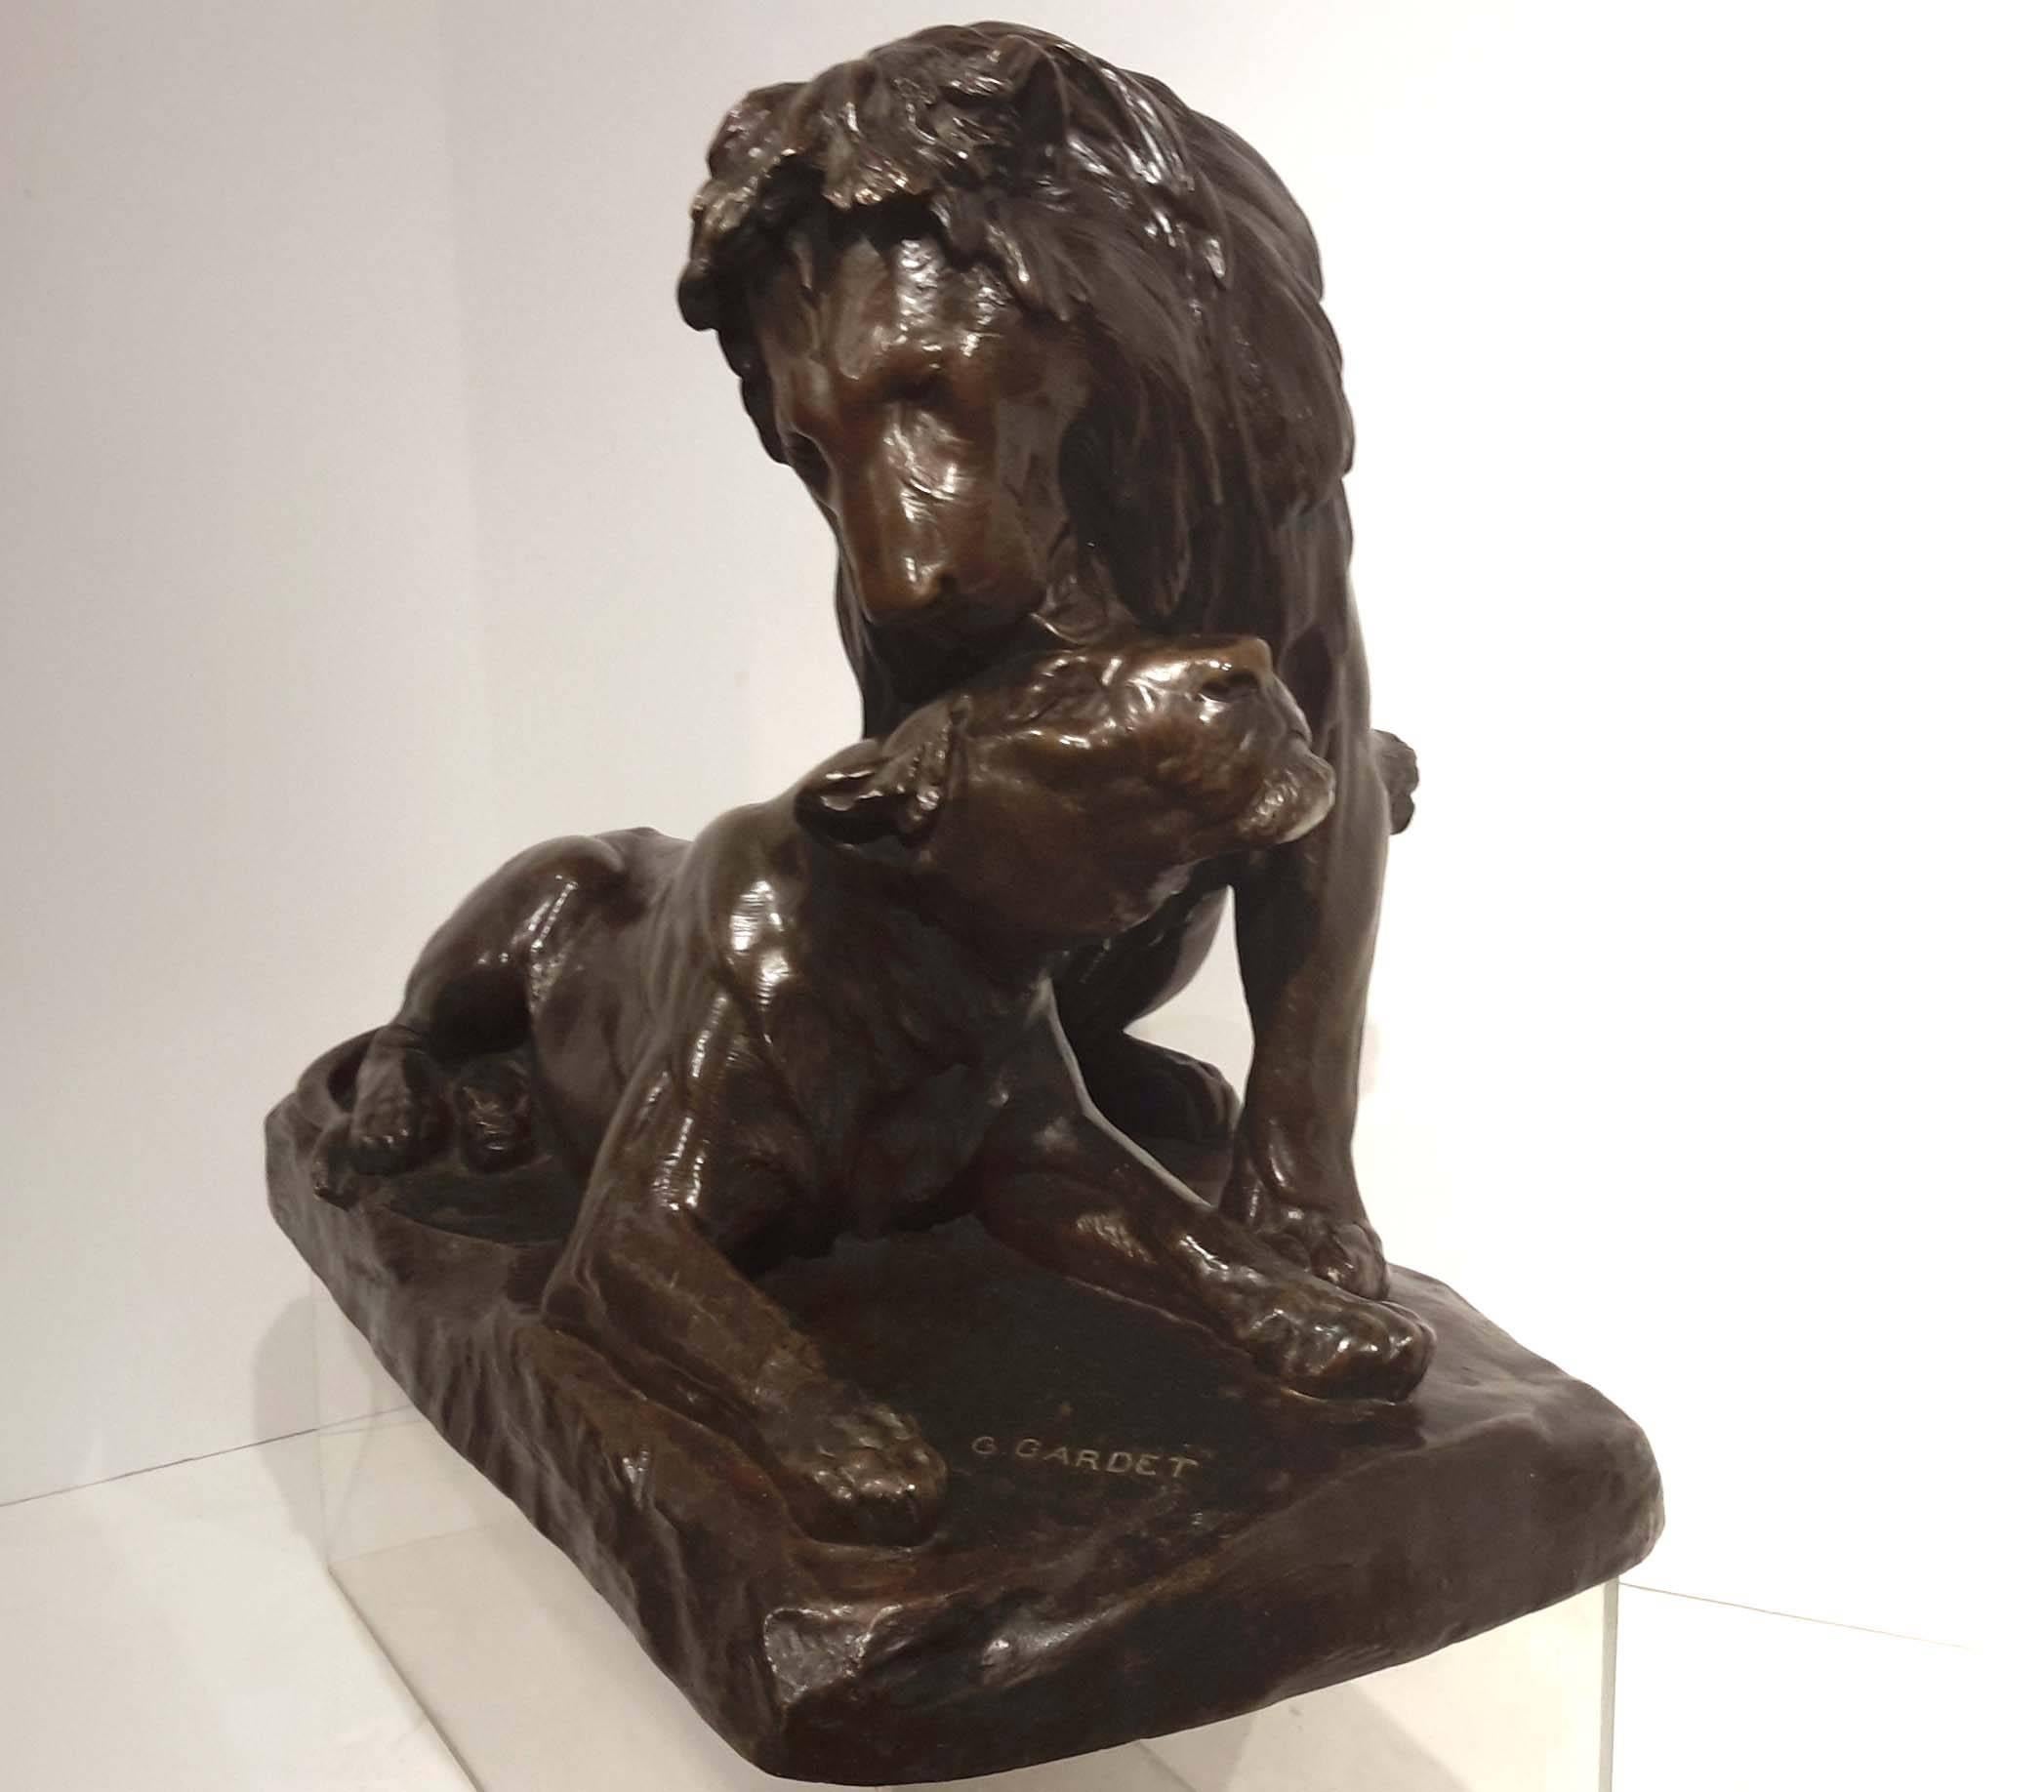 Georges Gardet, French, 1863-1939. Lion et Lionne. Signed 